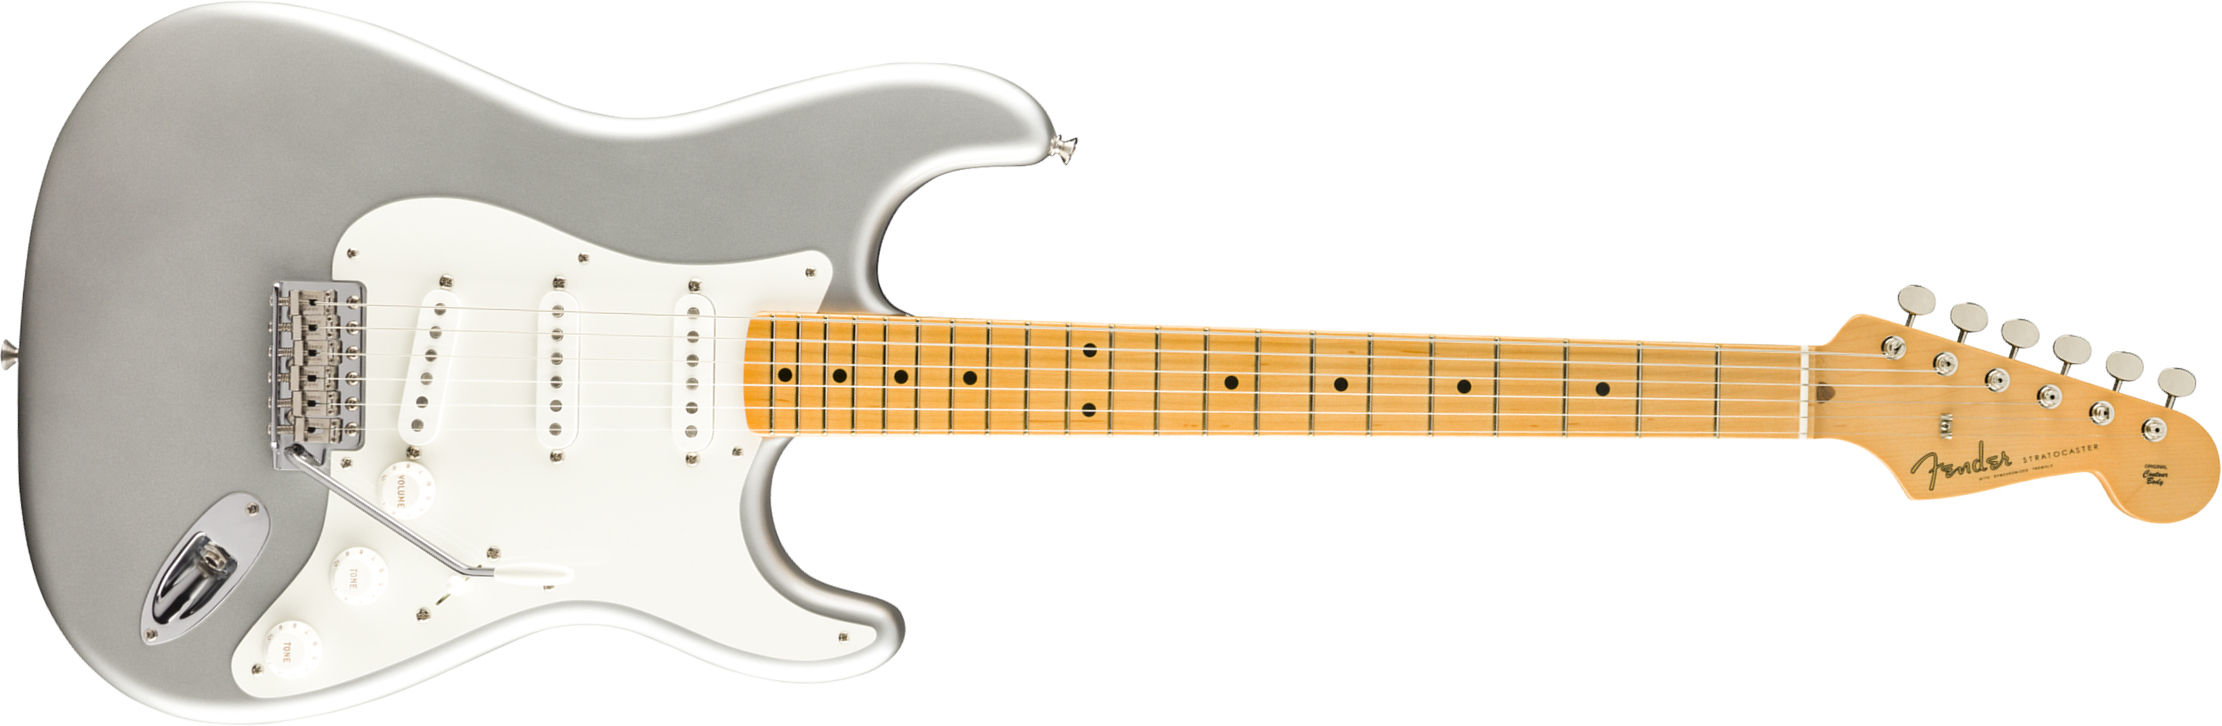 Fender Strat '50s American Original Usa Sss Mn - Inca Silver - Str shape electric guitar - Main picture